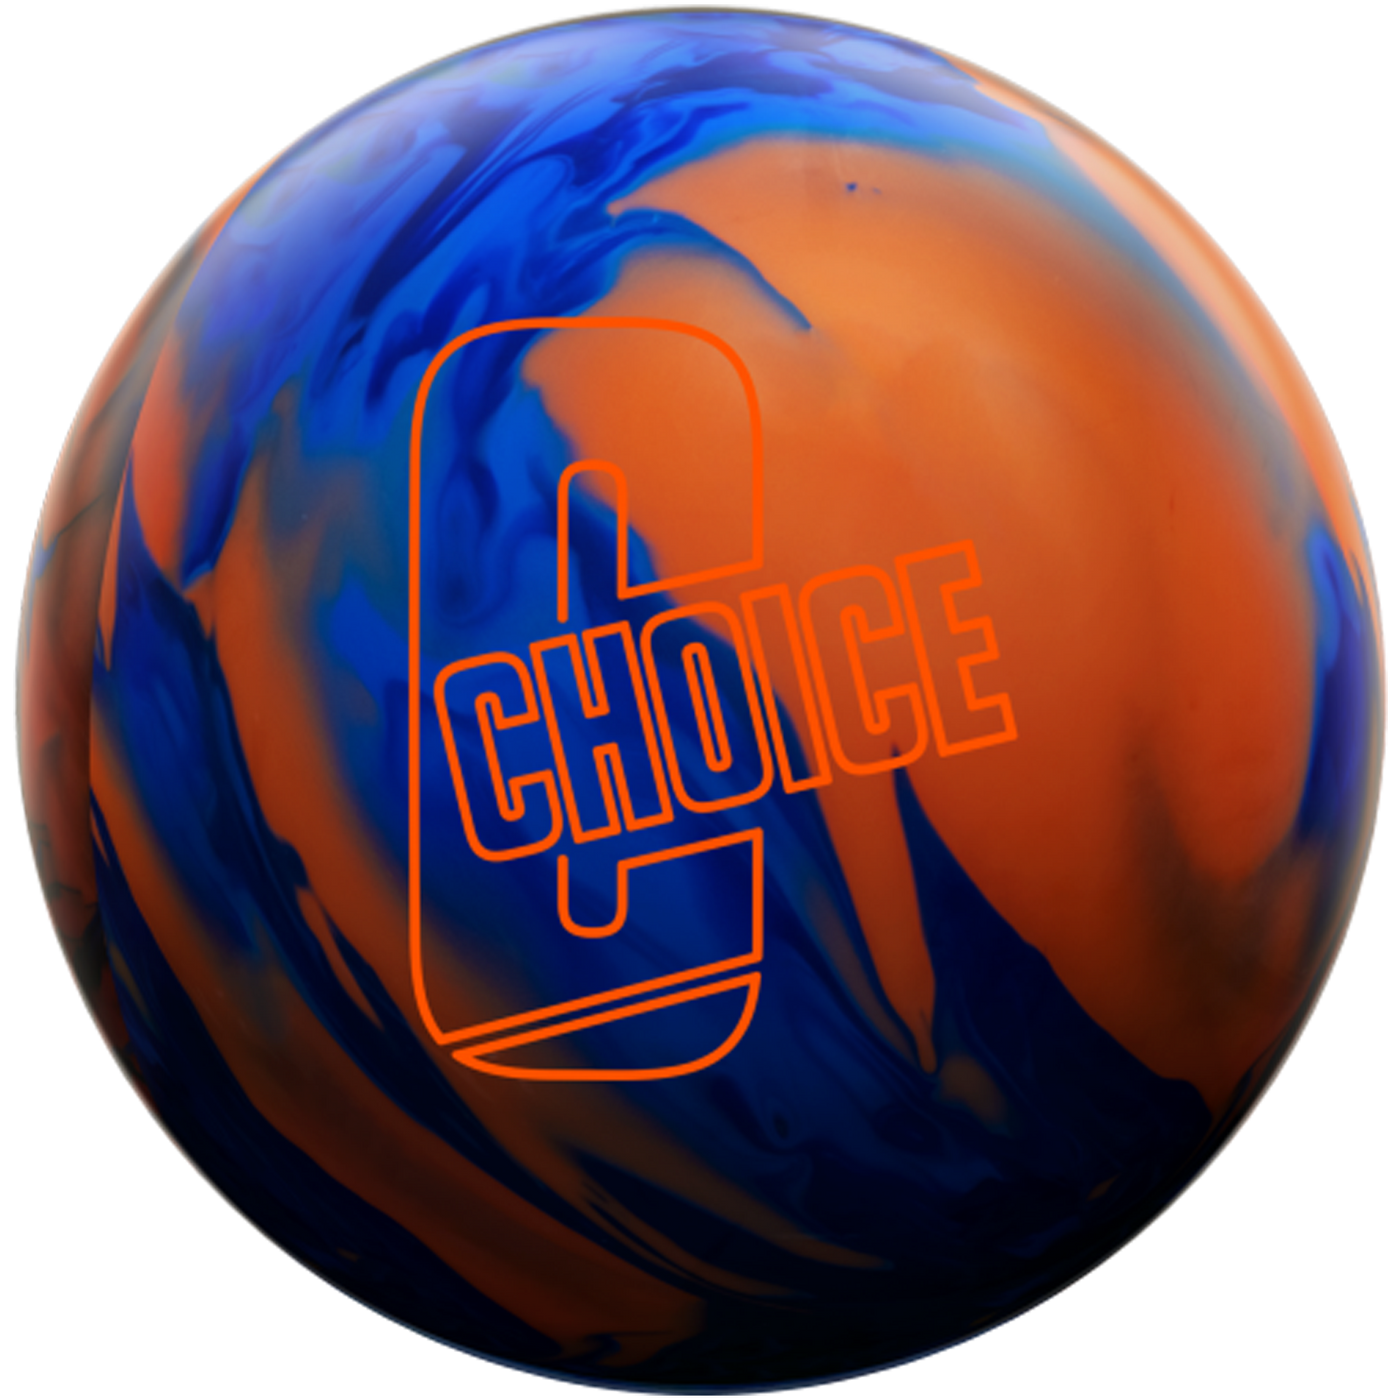 Choice Solid Bowling Ball